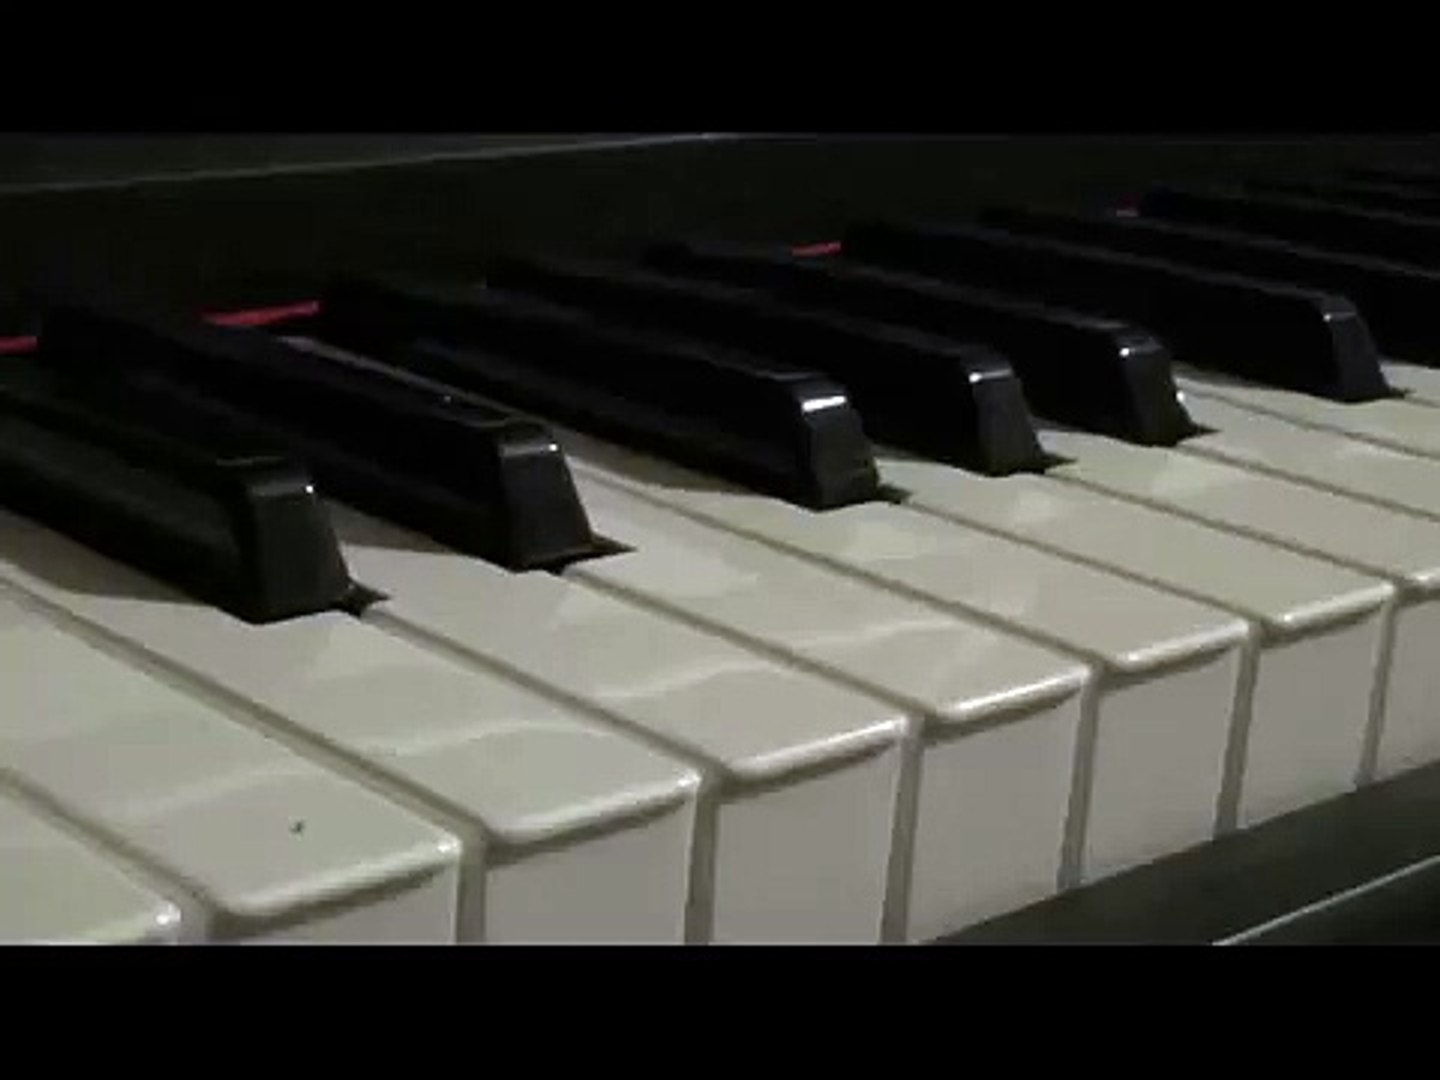 Musica Piano Instrumental - MUSICA DE PIANO ROMANTICA INSTRUMENTAL - video  Dailymotion